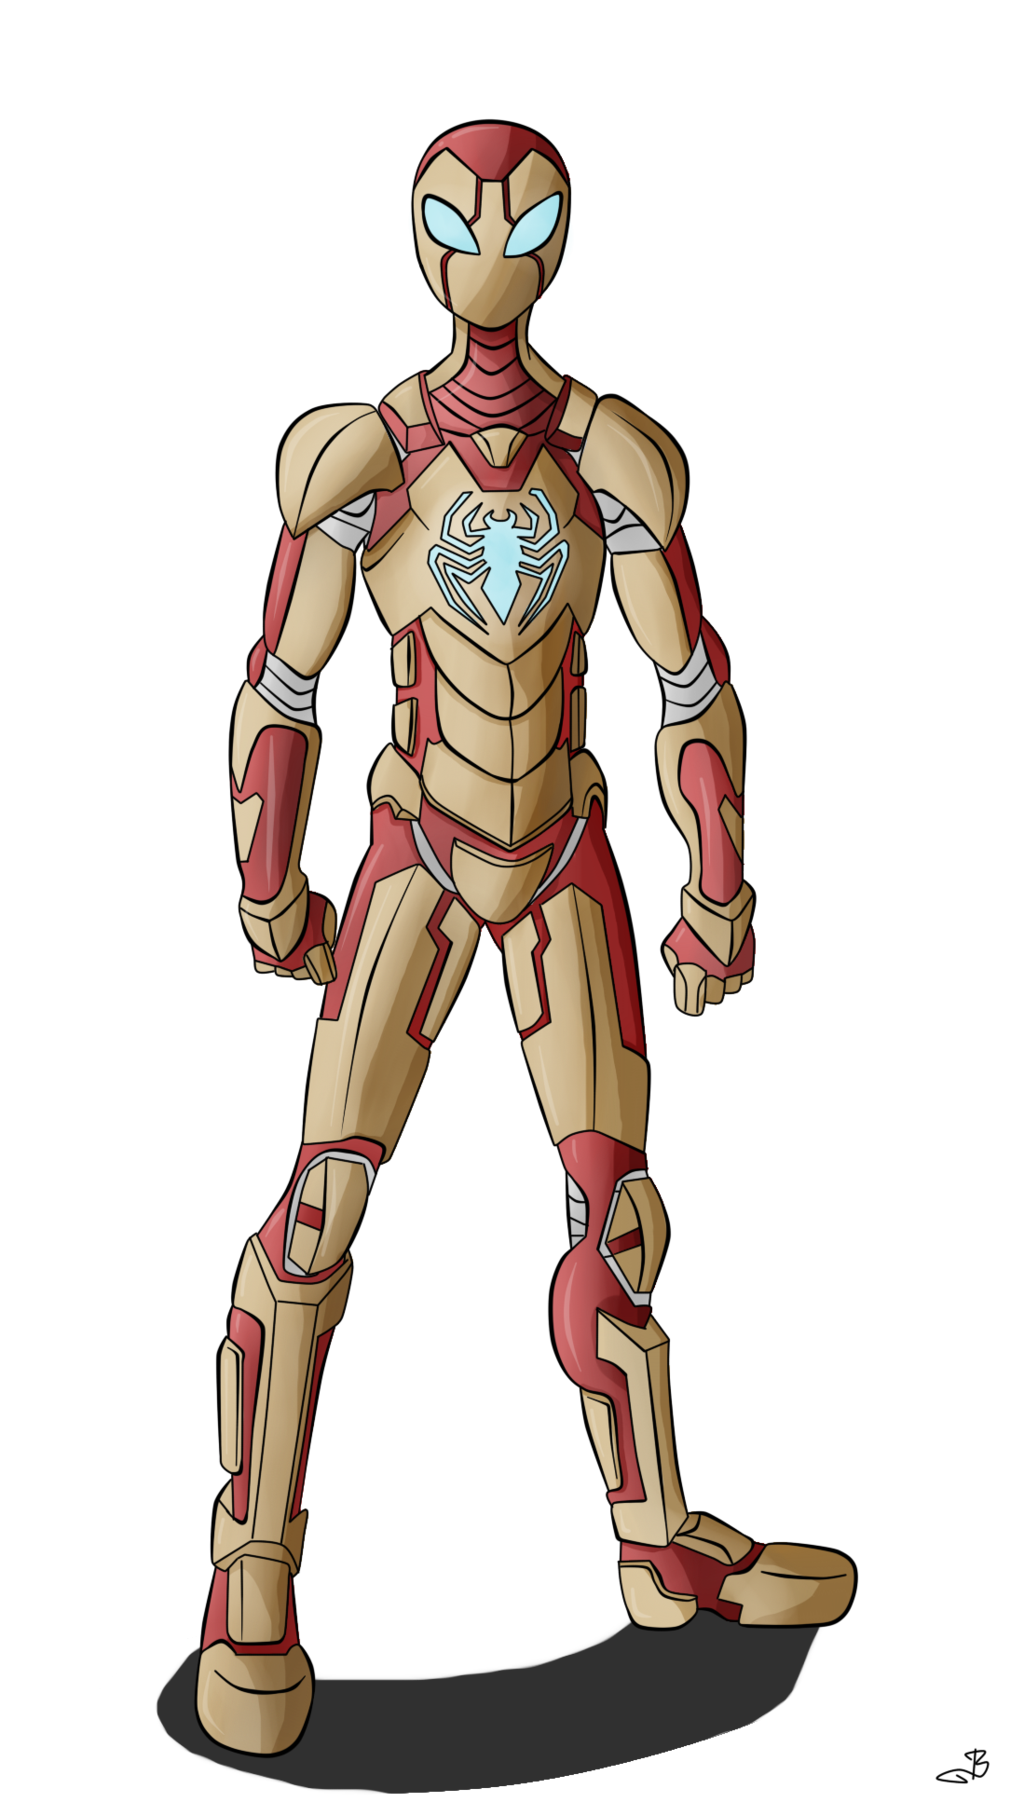 Iron Spiderman Transparent Image PNG Image